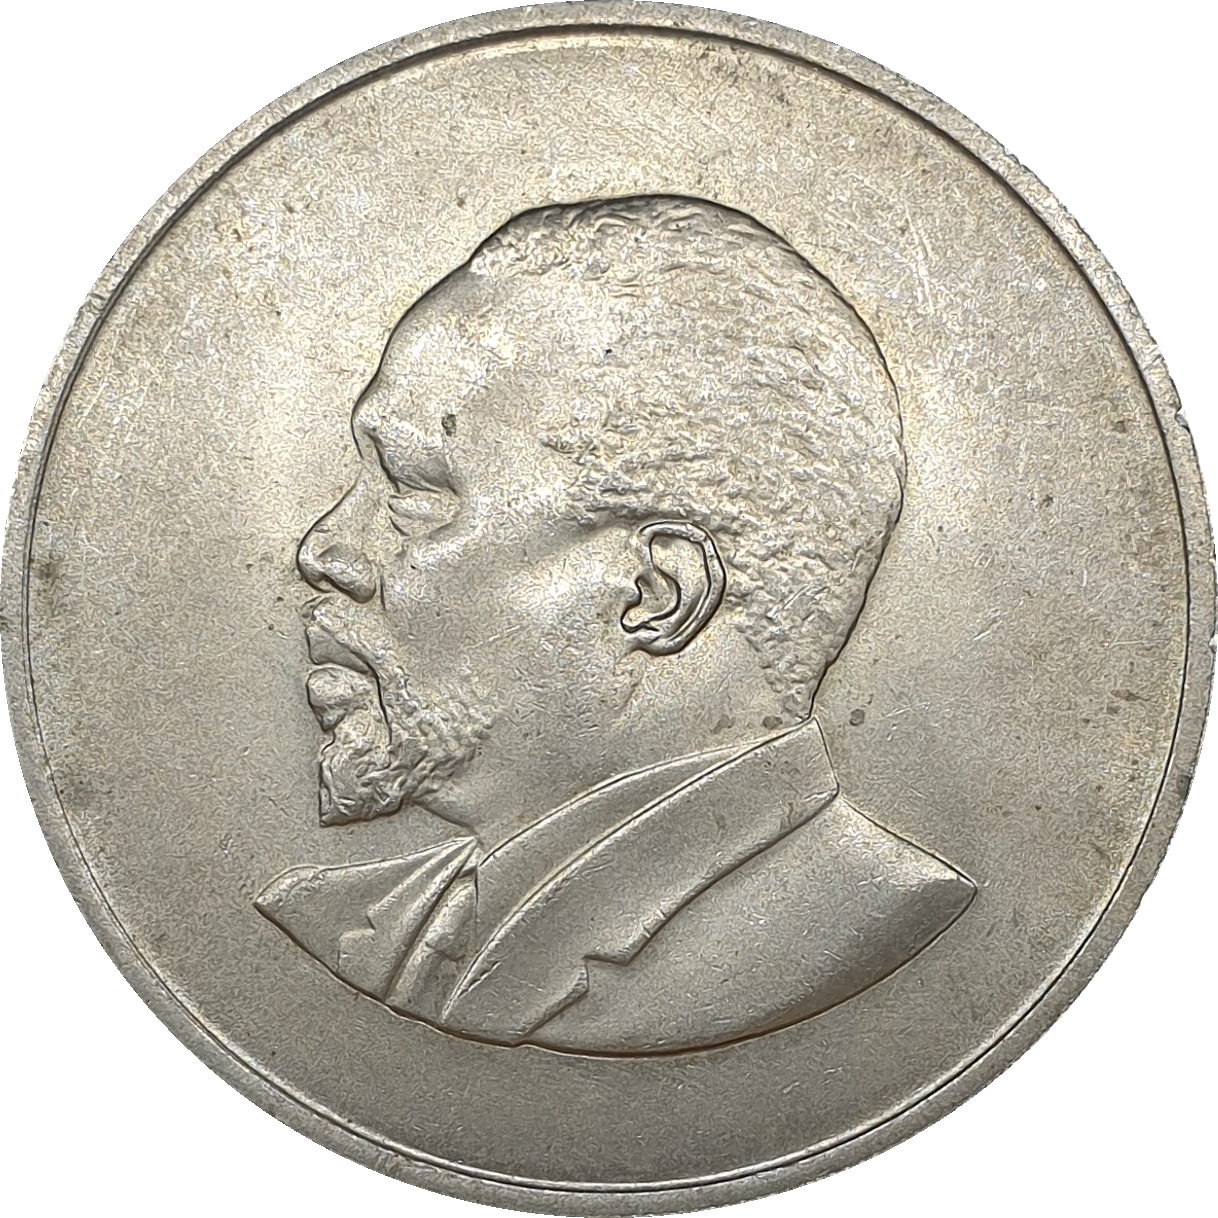 2 shillings - Mzee Jomo Kenyatta - No legend